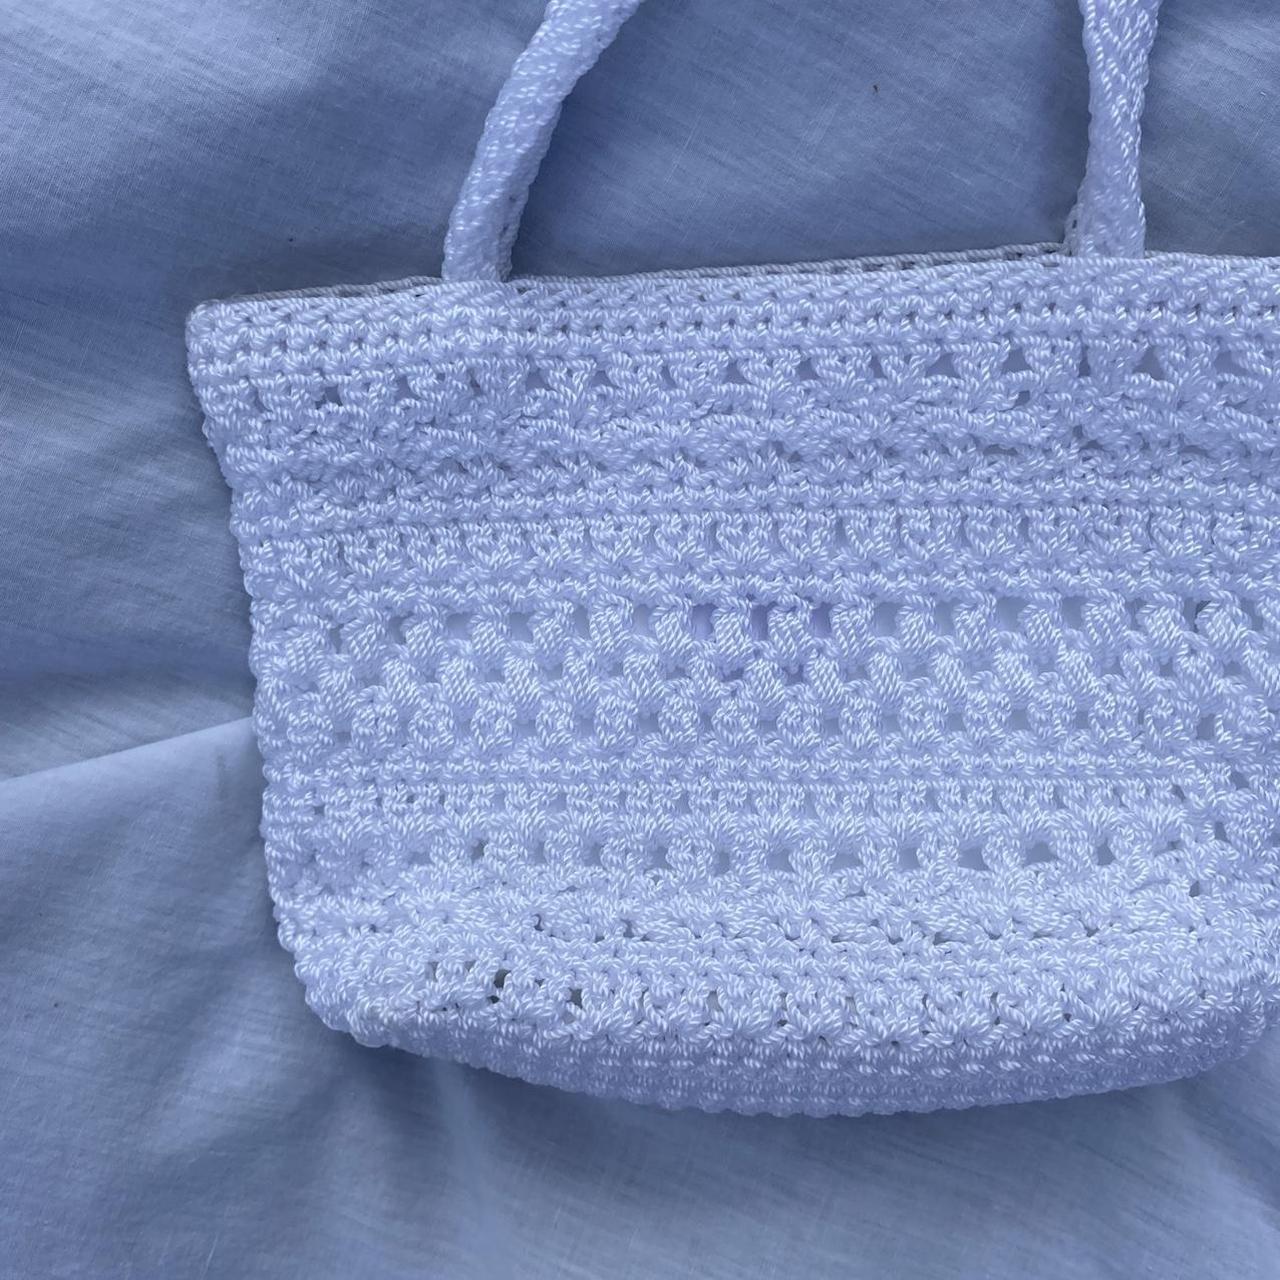 Product Image 3 - White woven handbag

Brand: Lina

Era: 2000s

Style/aesthetic: